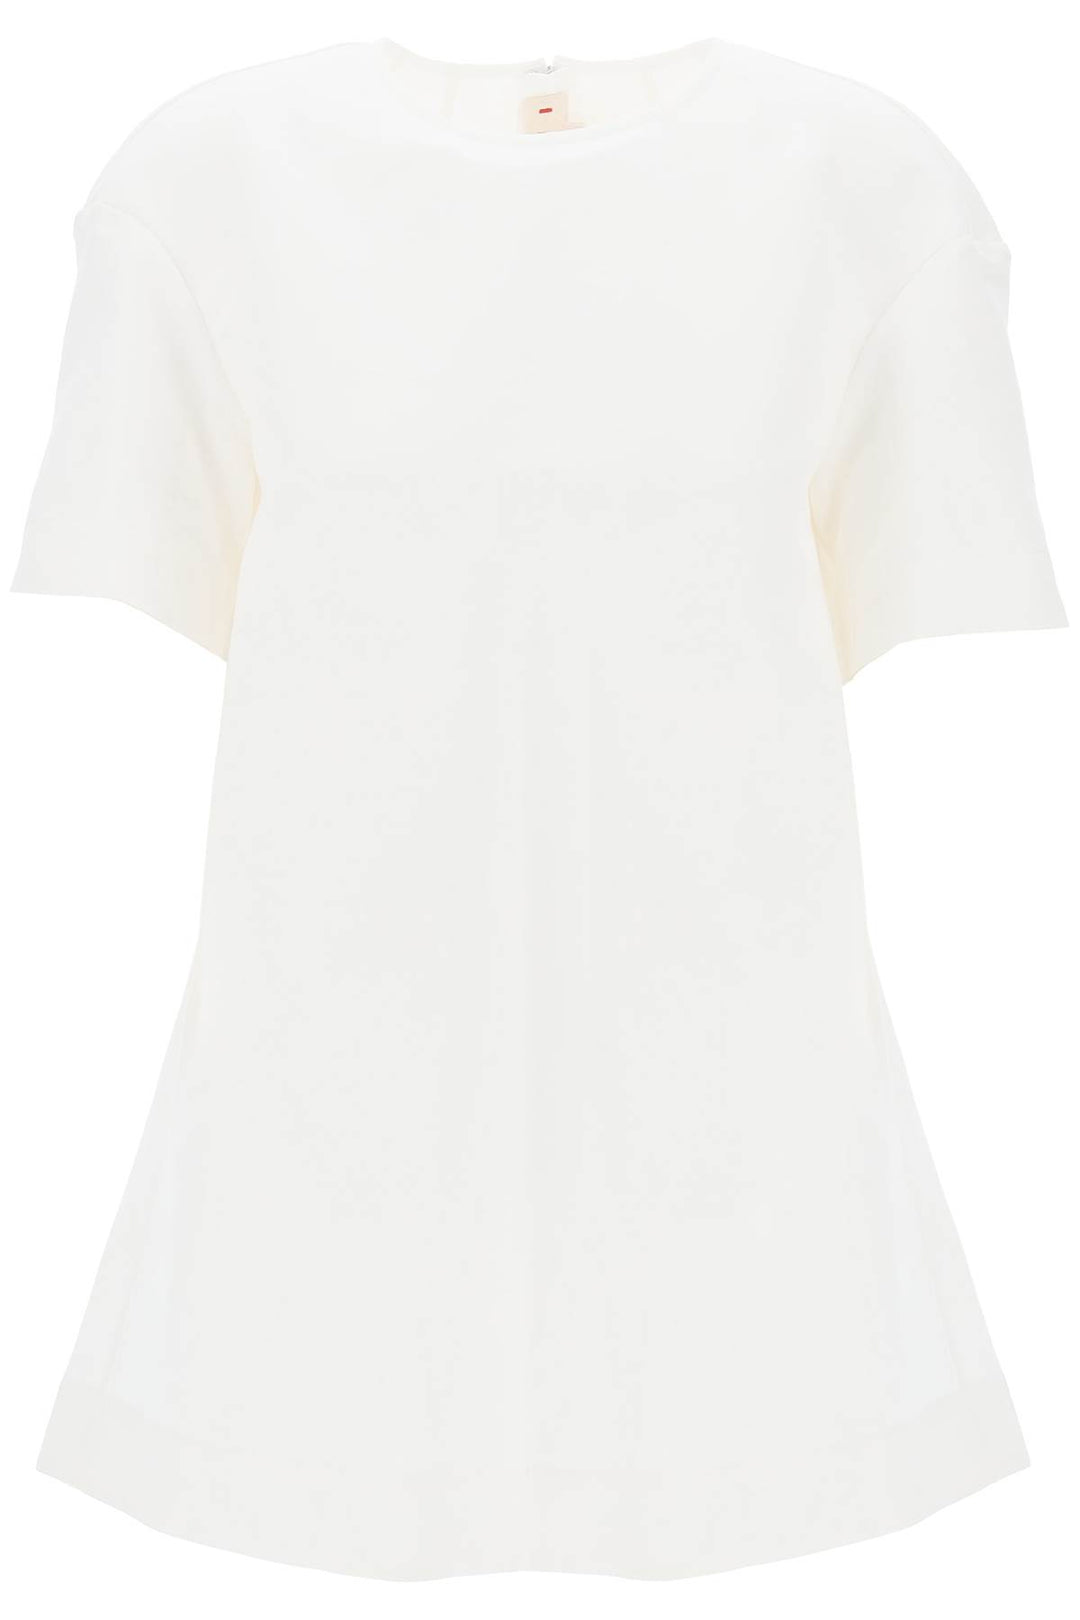 Marni Cocoon Cady Dress   White